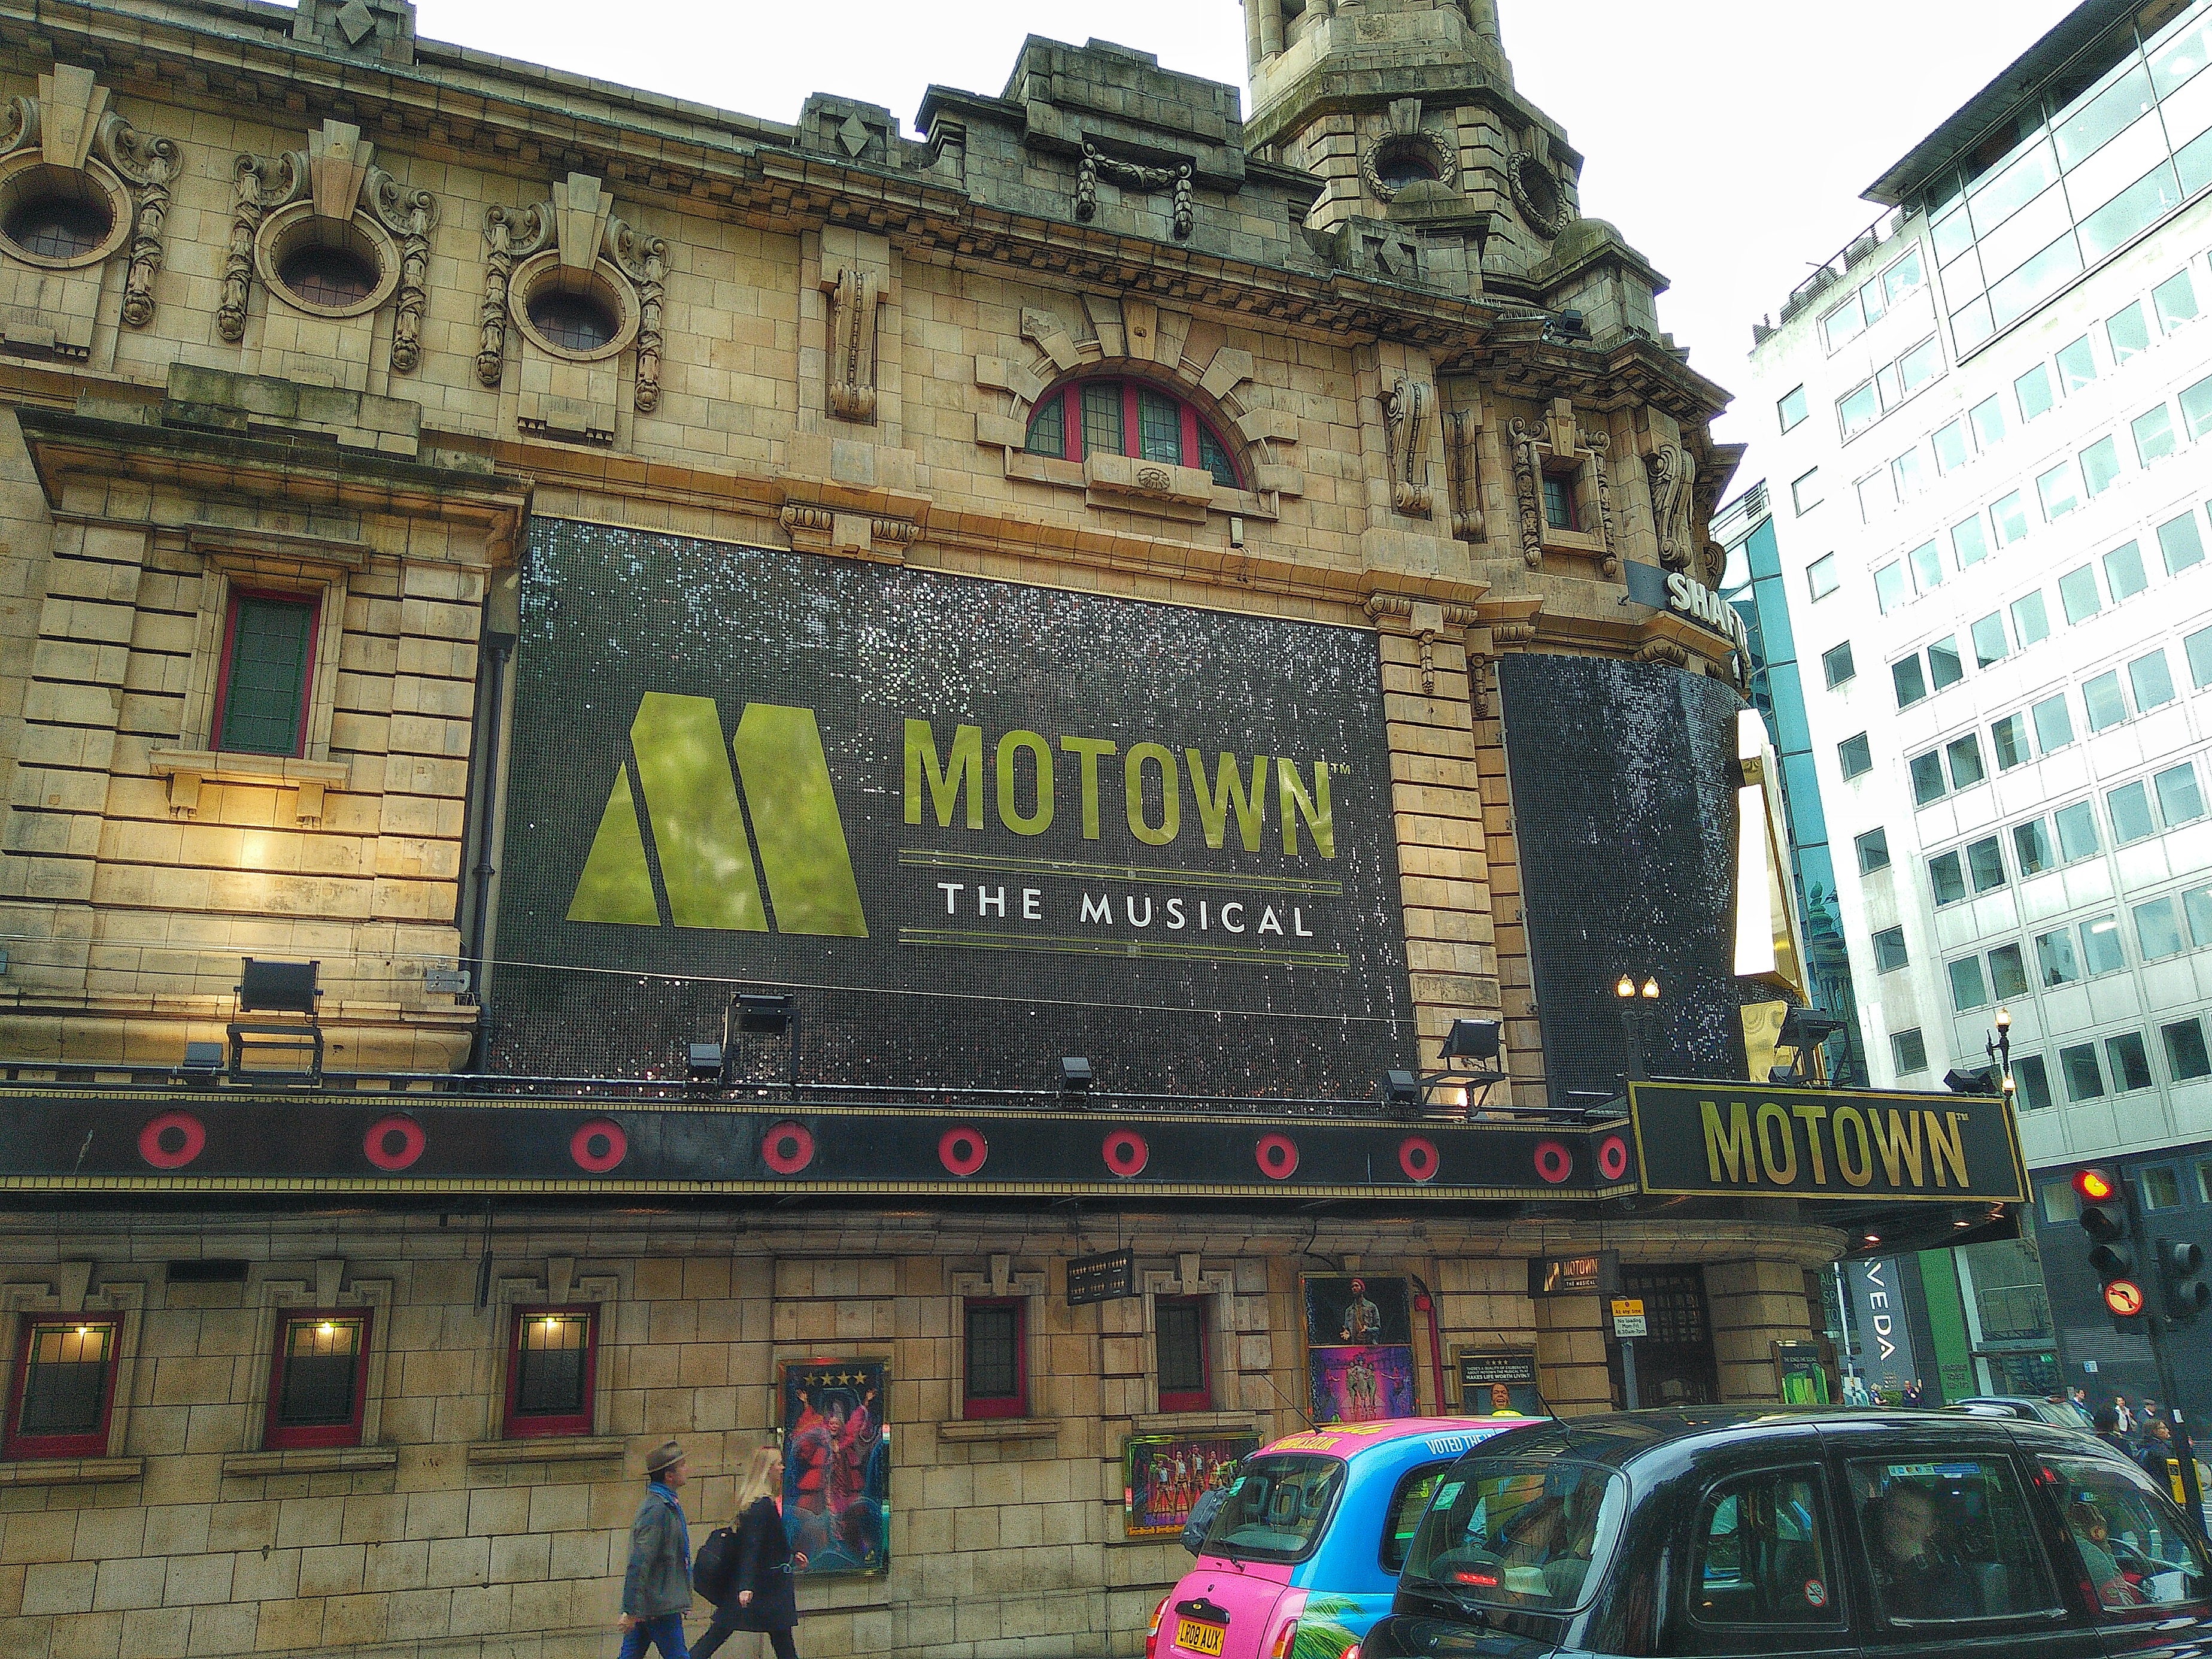 Motown the musical London - Enjoy the Adventure blog